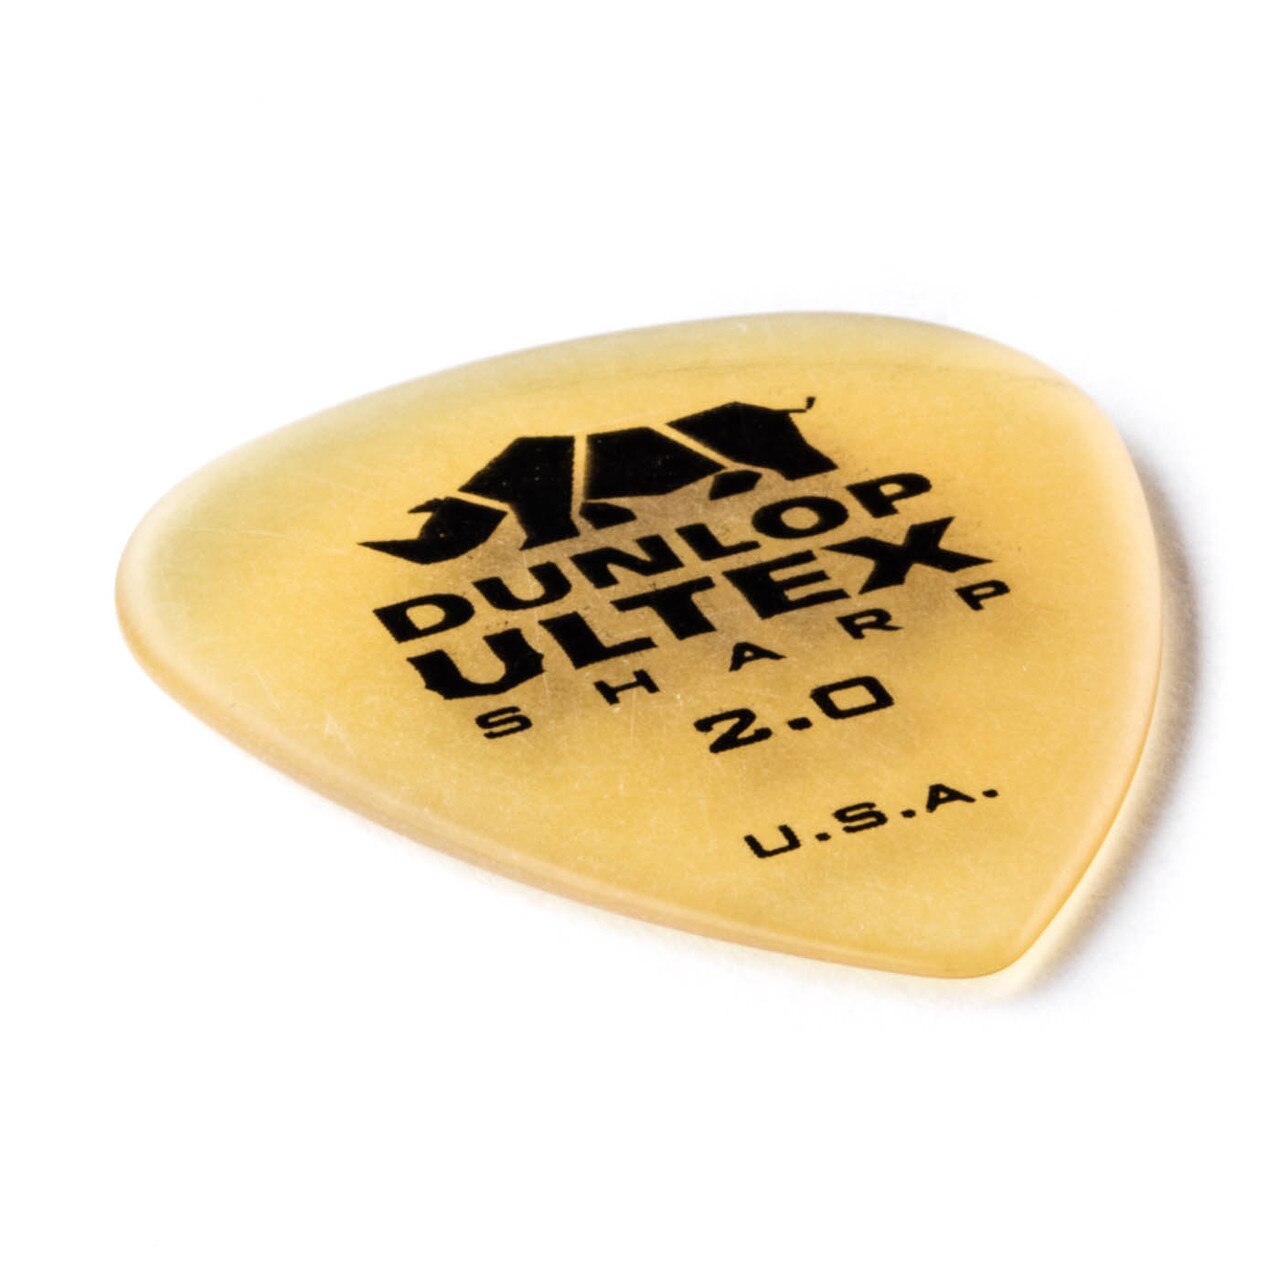 Jim Dunlop Ultex Sharp 433 2.0mm - Púas - Variation 1